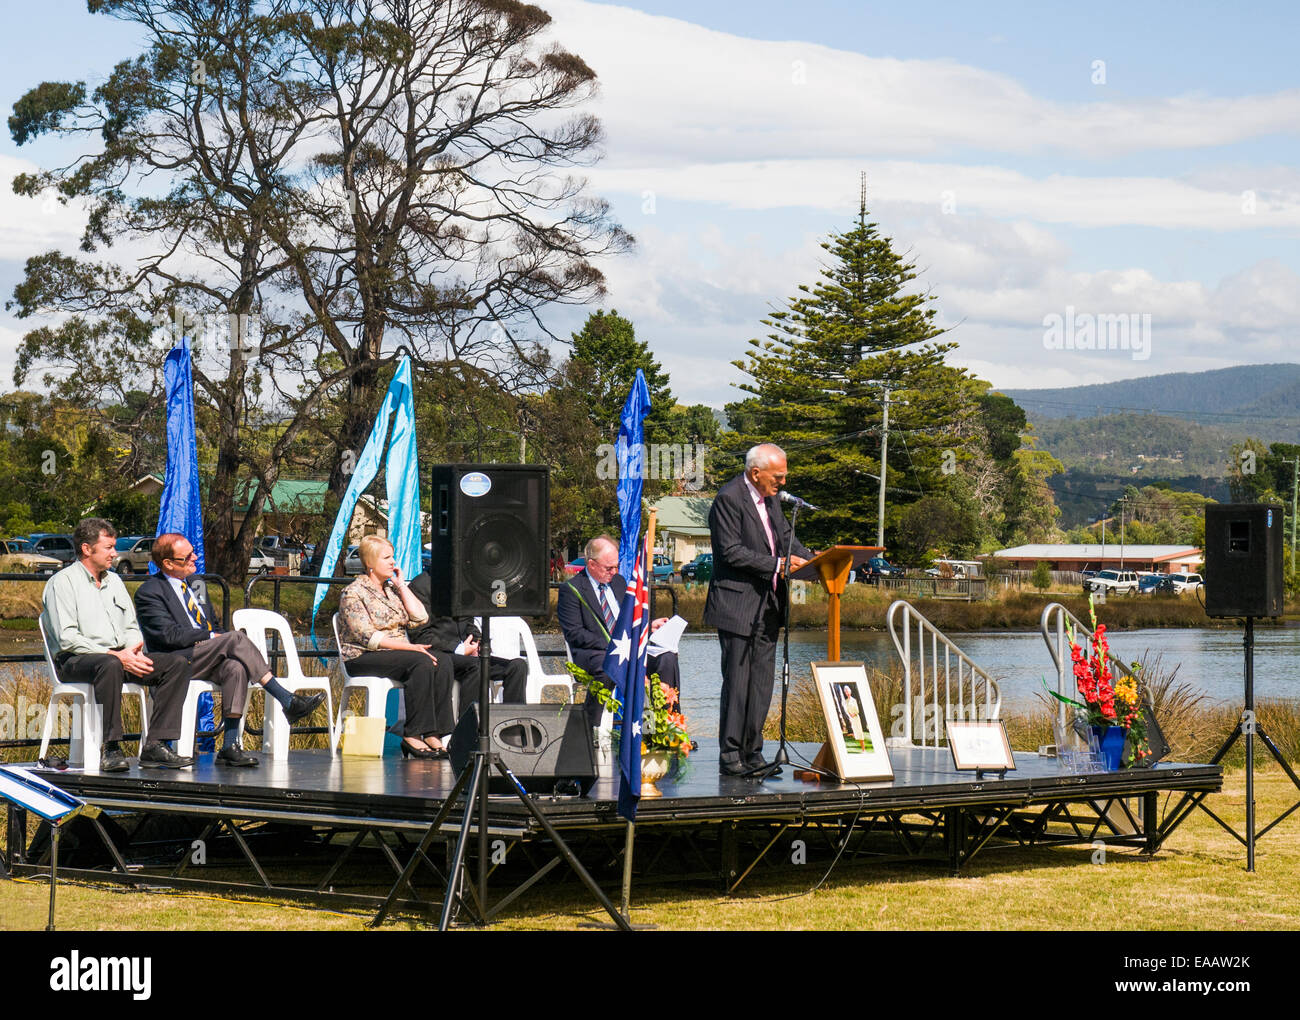 Local dignitary speaking at an Australian citizenship ceremony on Australia Day in Kingston, Tasmania Stock Photo